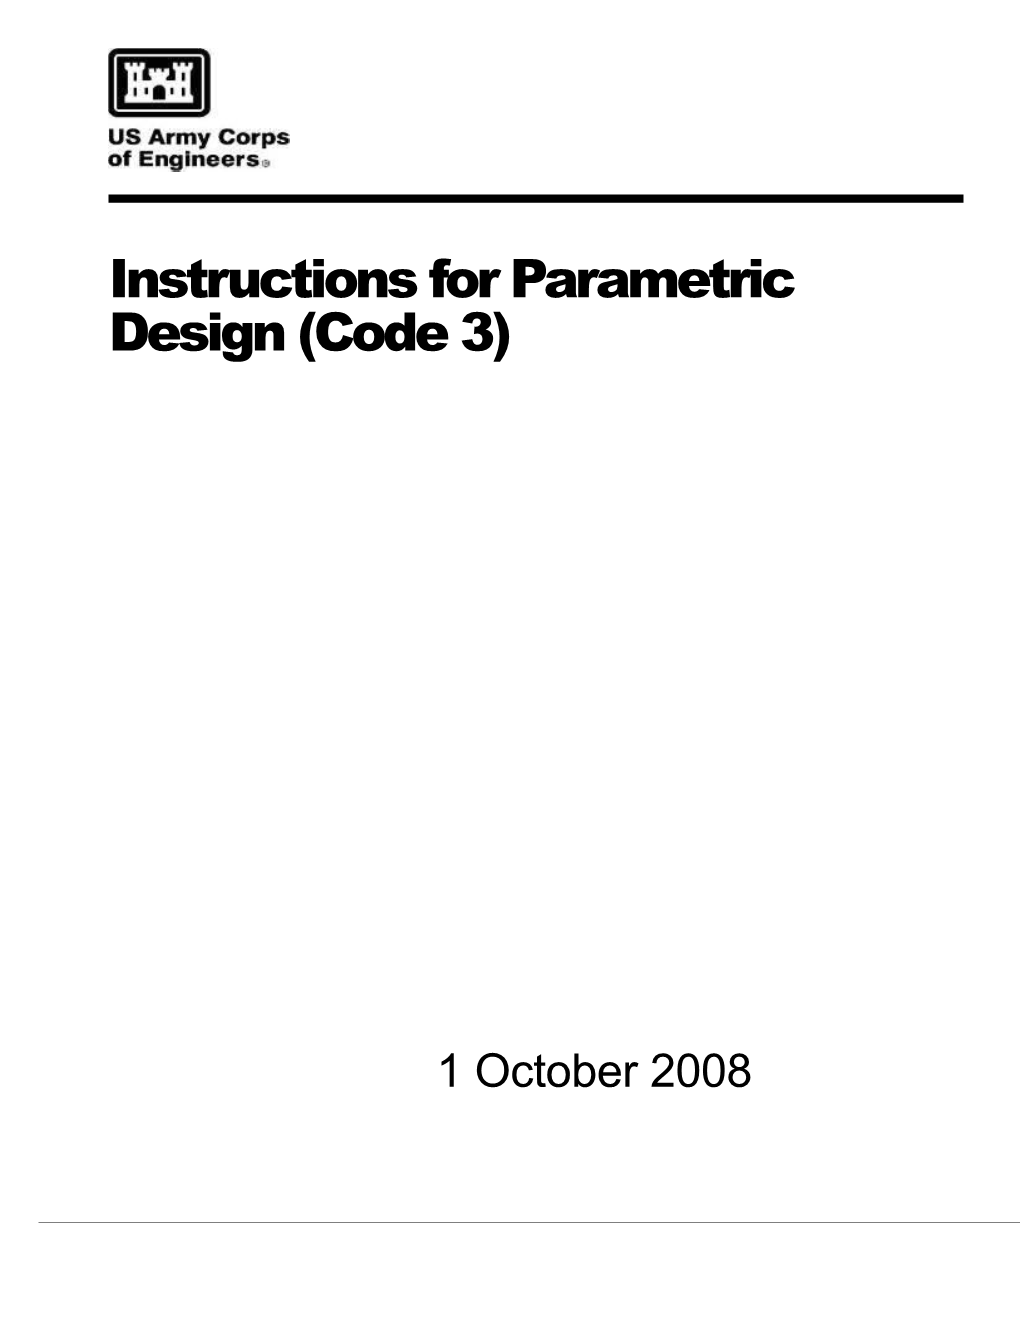 Parametric Design Instructions